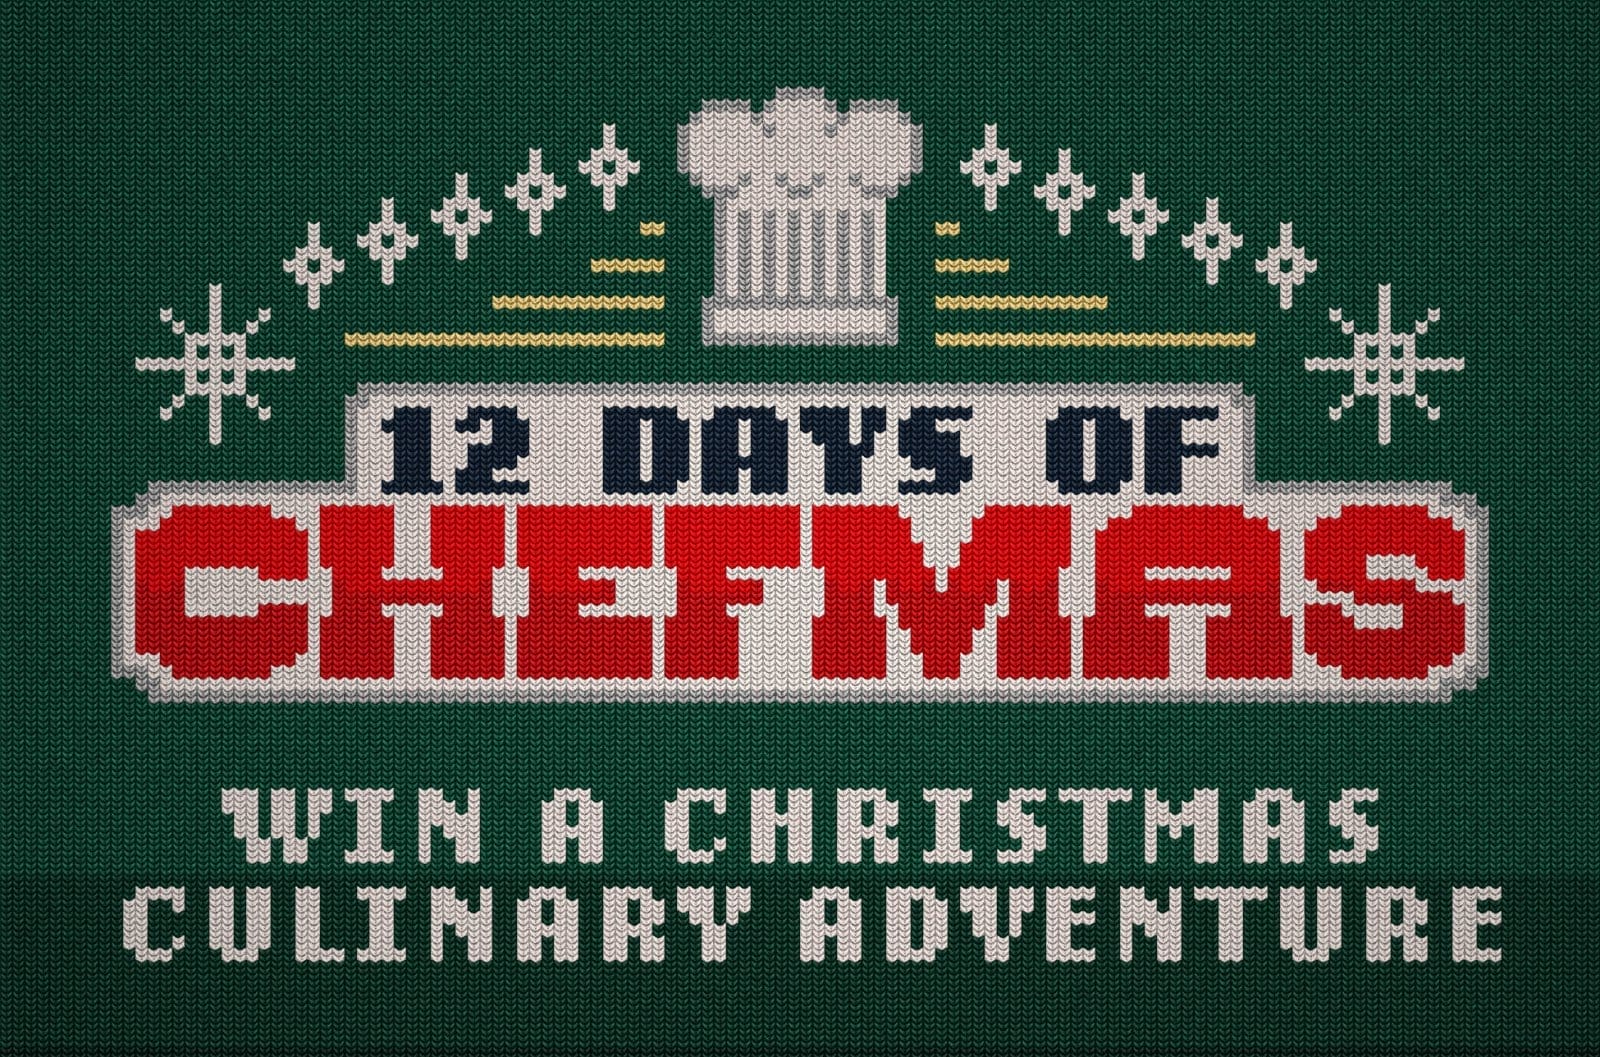 12 Days of Chefmas - win a Christmas culinary adventure